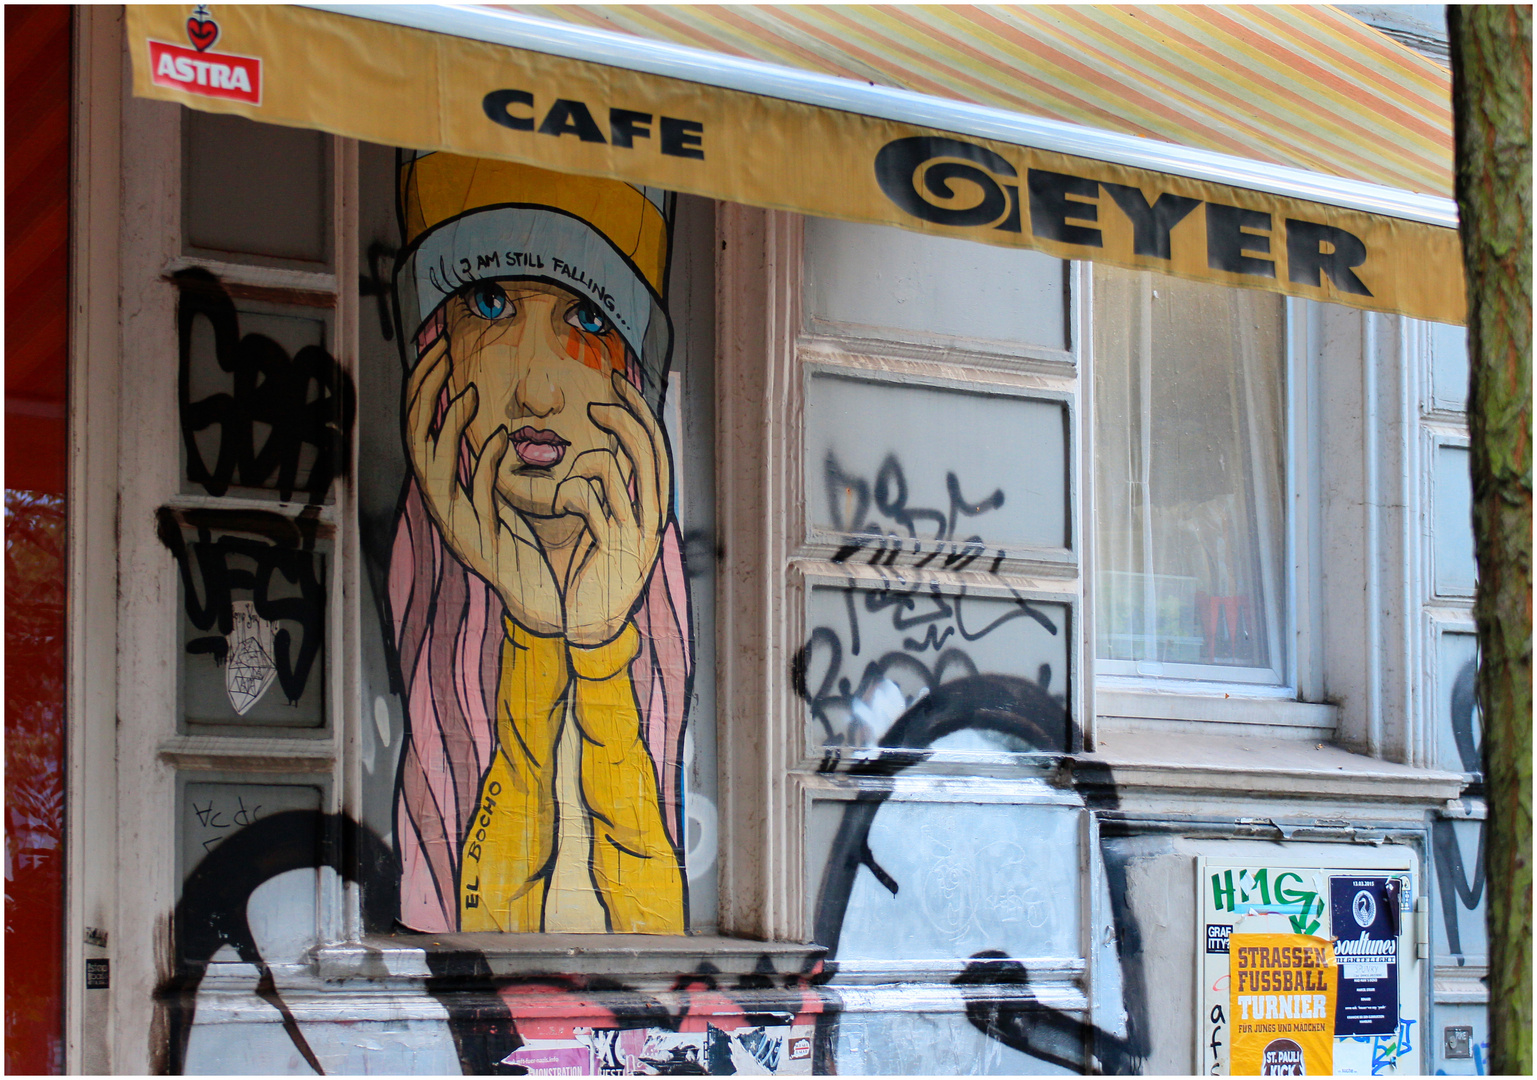  Cafe Geyer HH